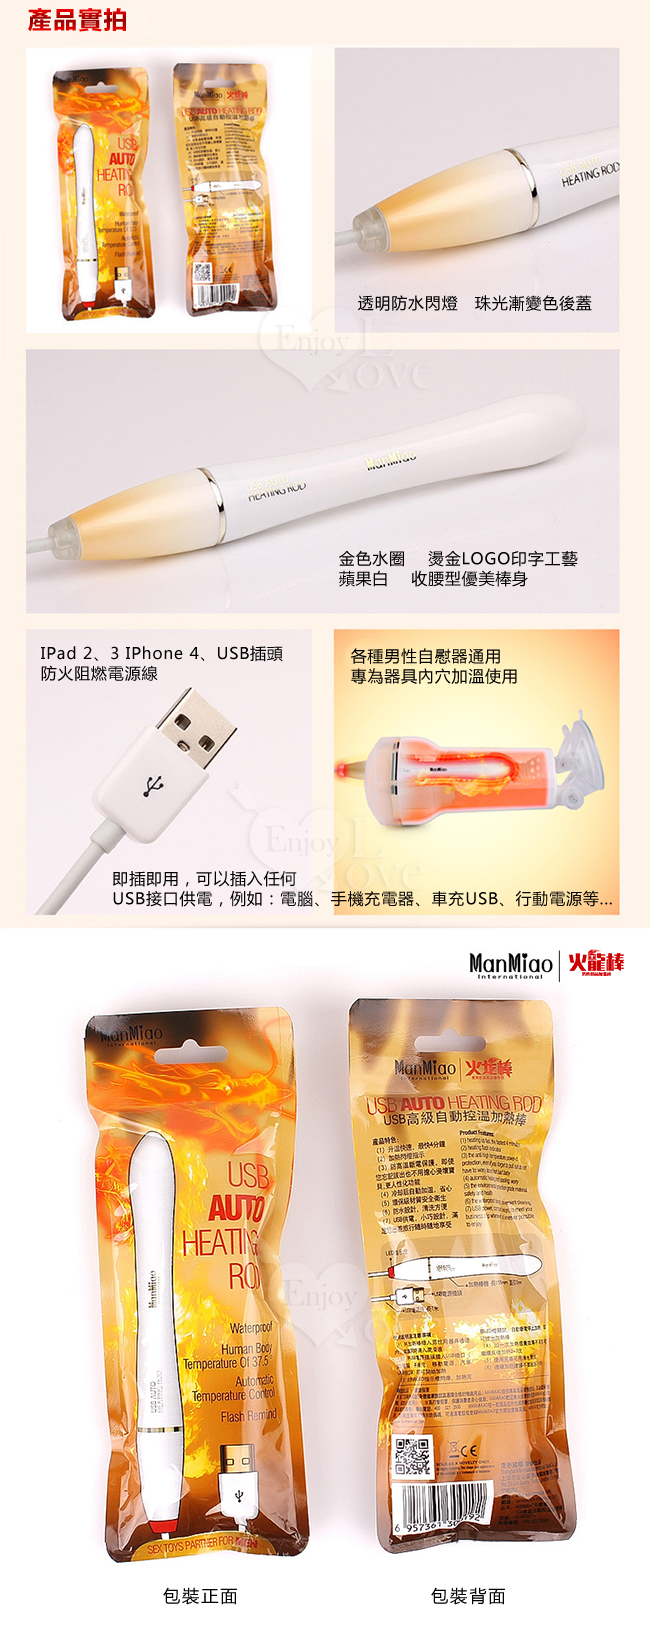 ManMiao 火龍棒‧全自動溫控USB加熱棒﹝自慰器飛機杯專用﹞